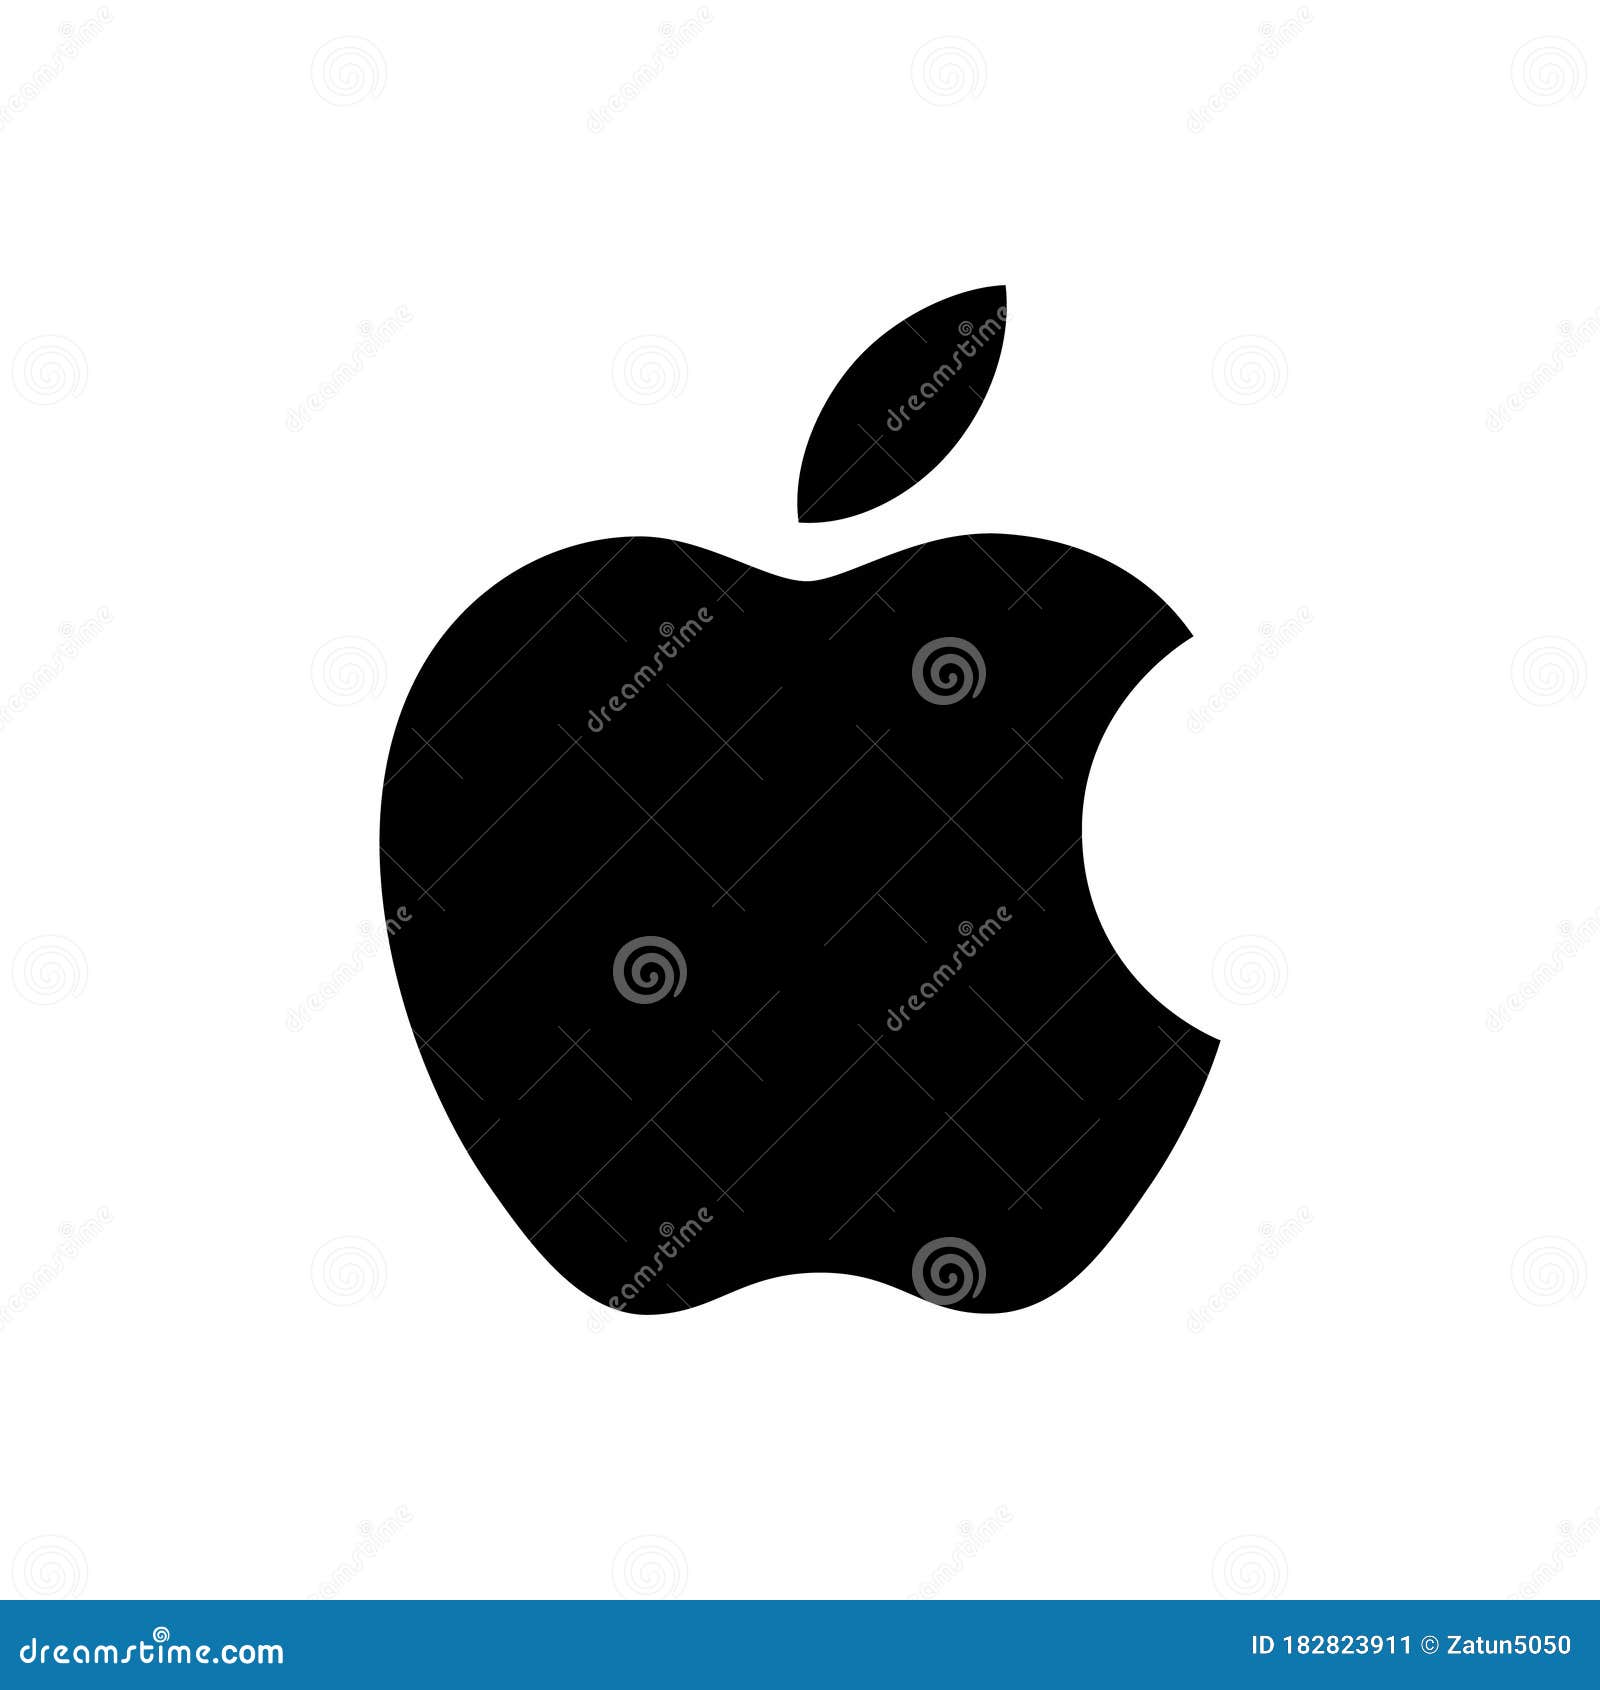 apple-company-logo-vector-printable-editorial-photo-illustration-of